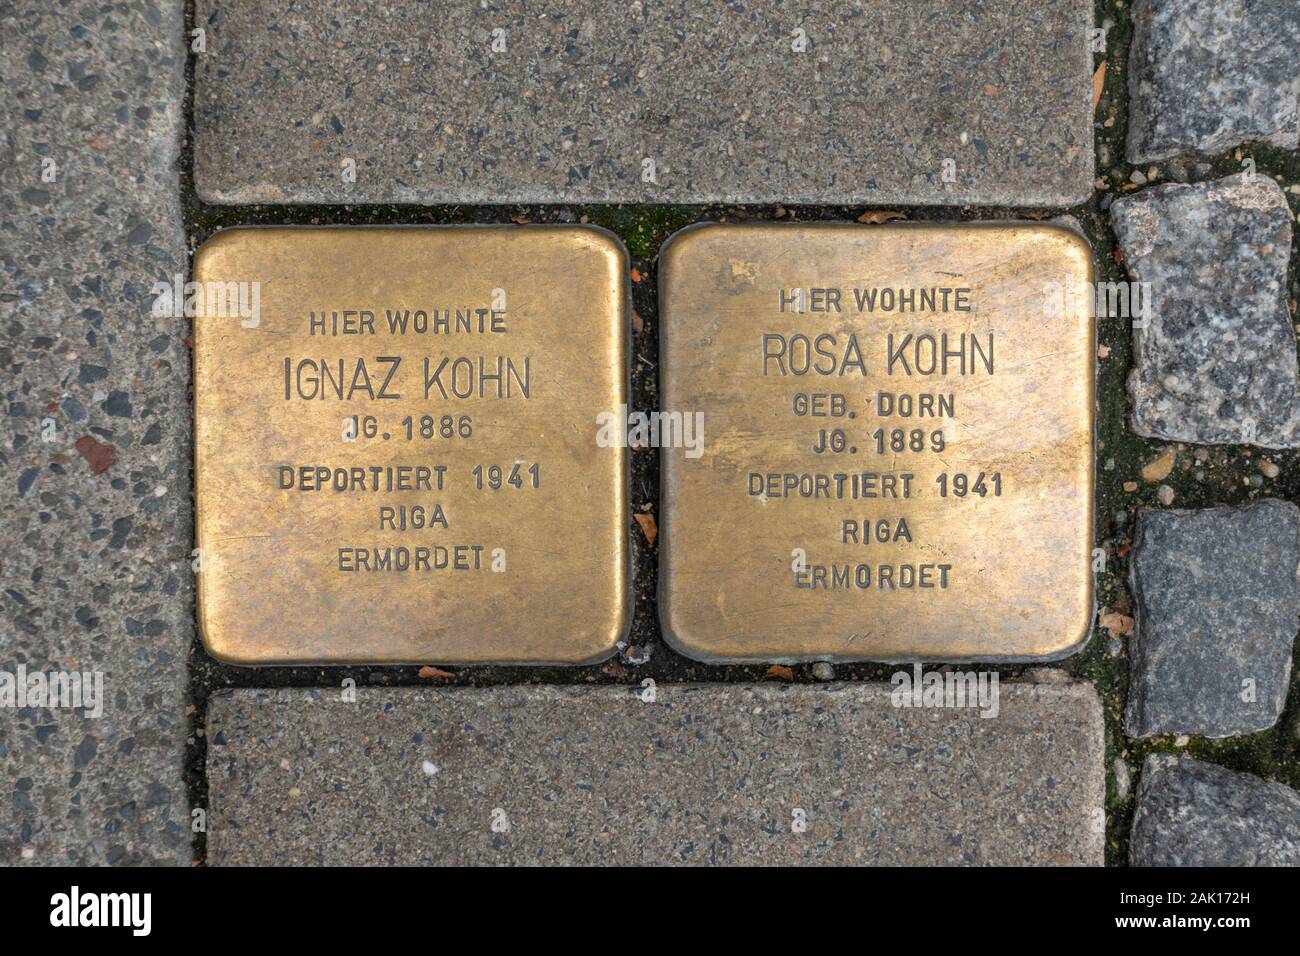 'Stumbling stones' Holocaust memorial markers for Ignaz Kohn and Rosa Kohn in Coburg, Bavaria, Germany. Stock Photo